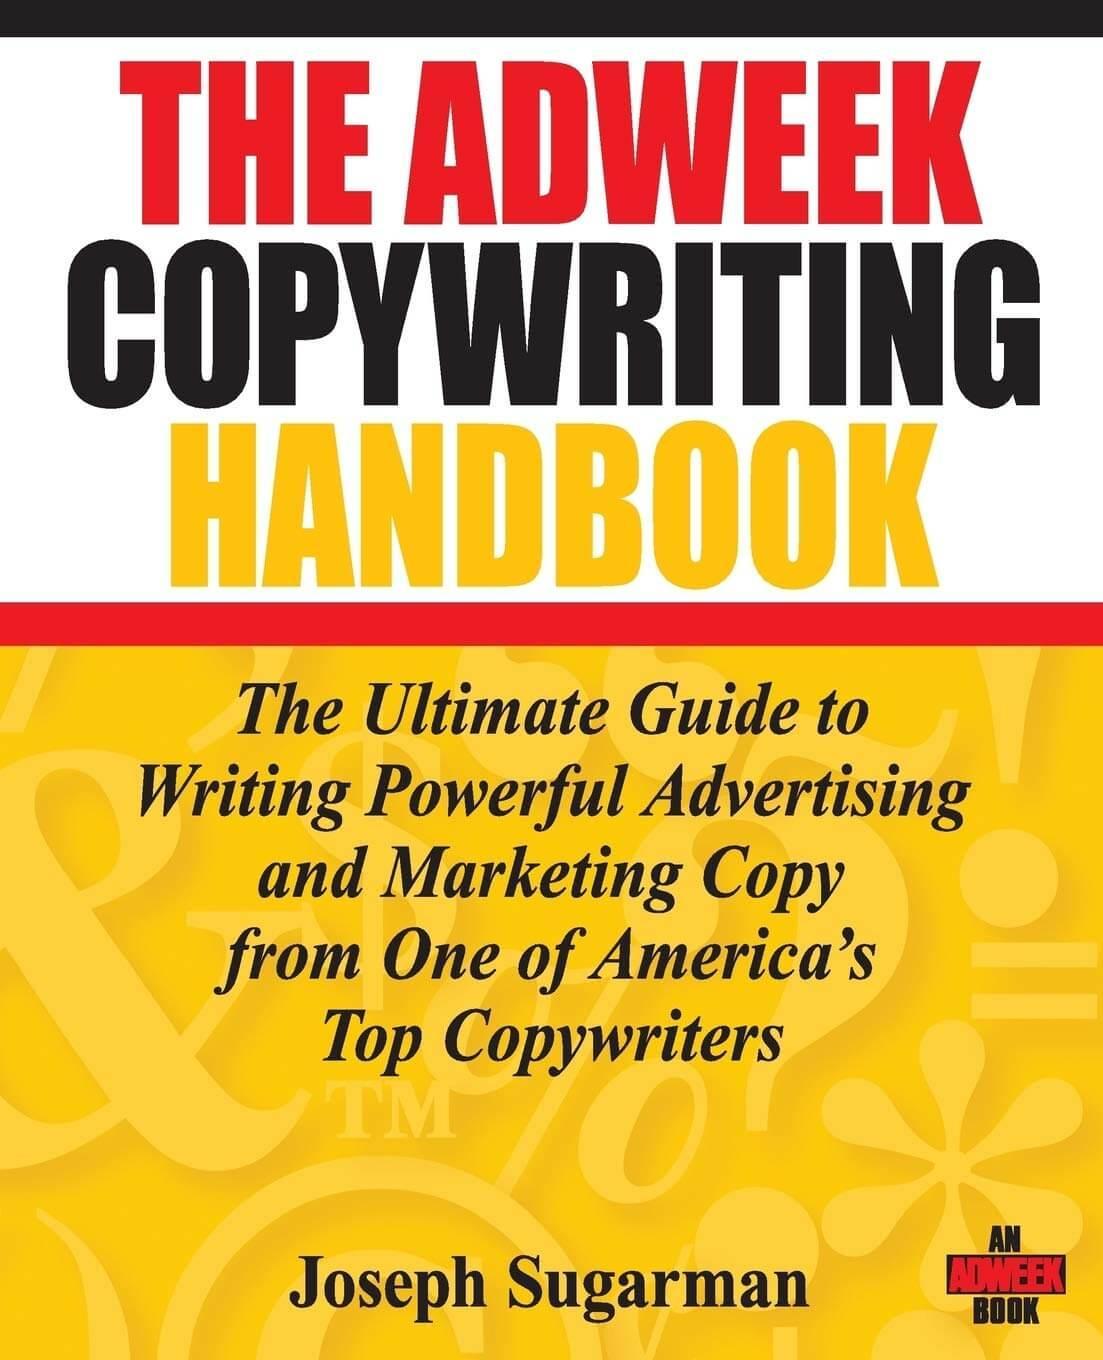 Book cover for Joseph Sugarman's "The Adweek Copywriting Handbook"